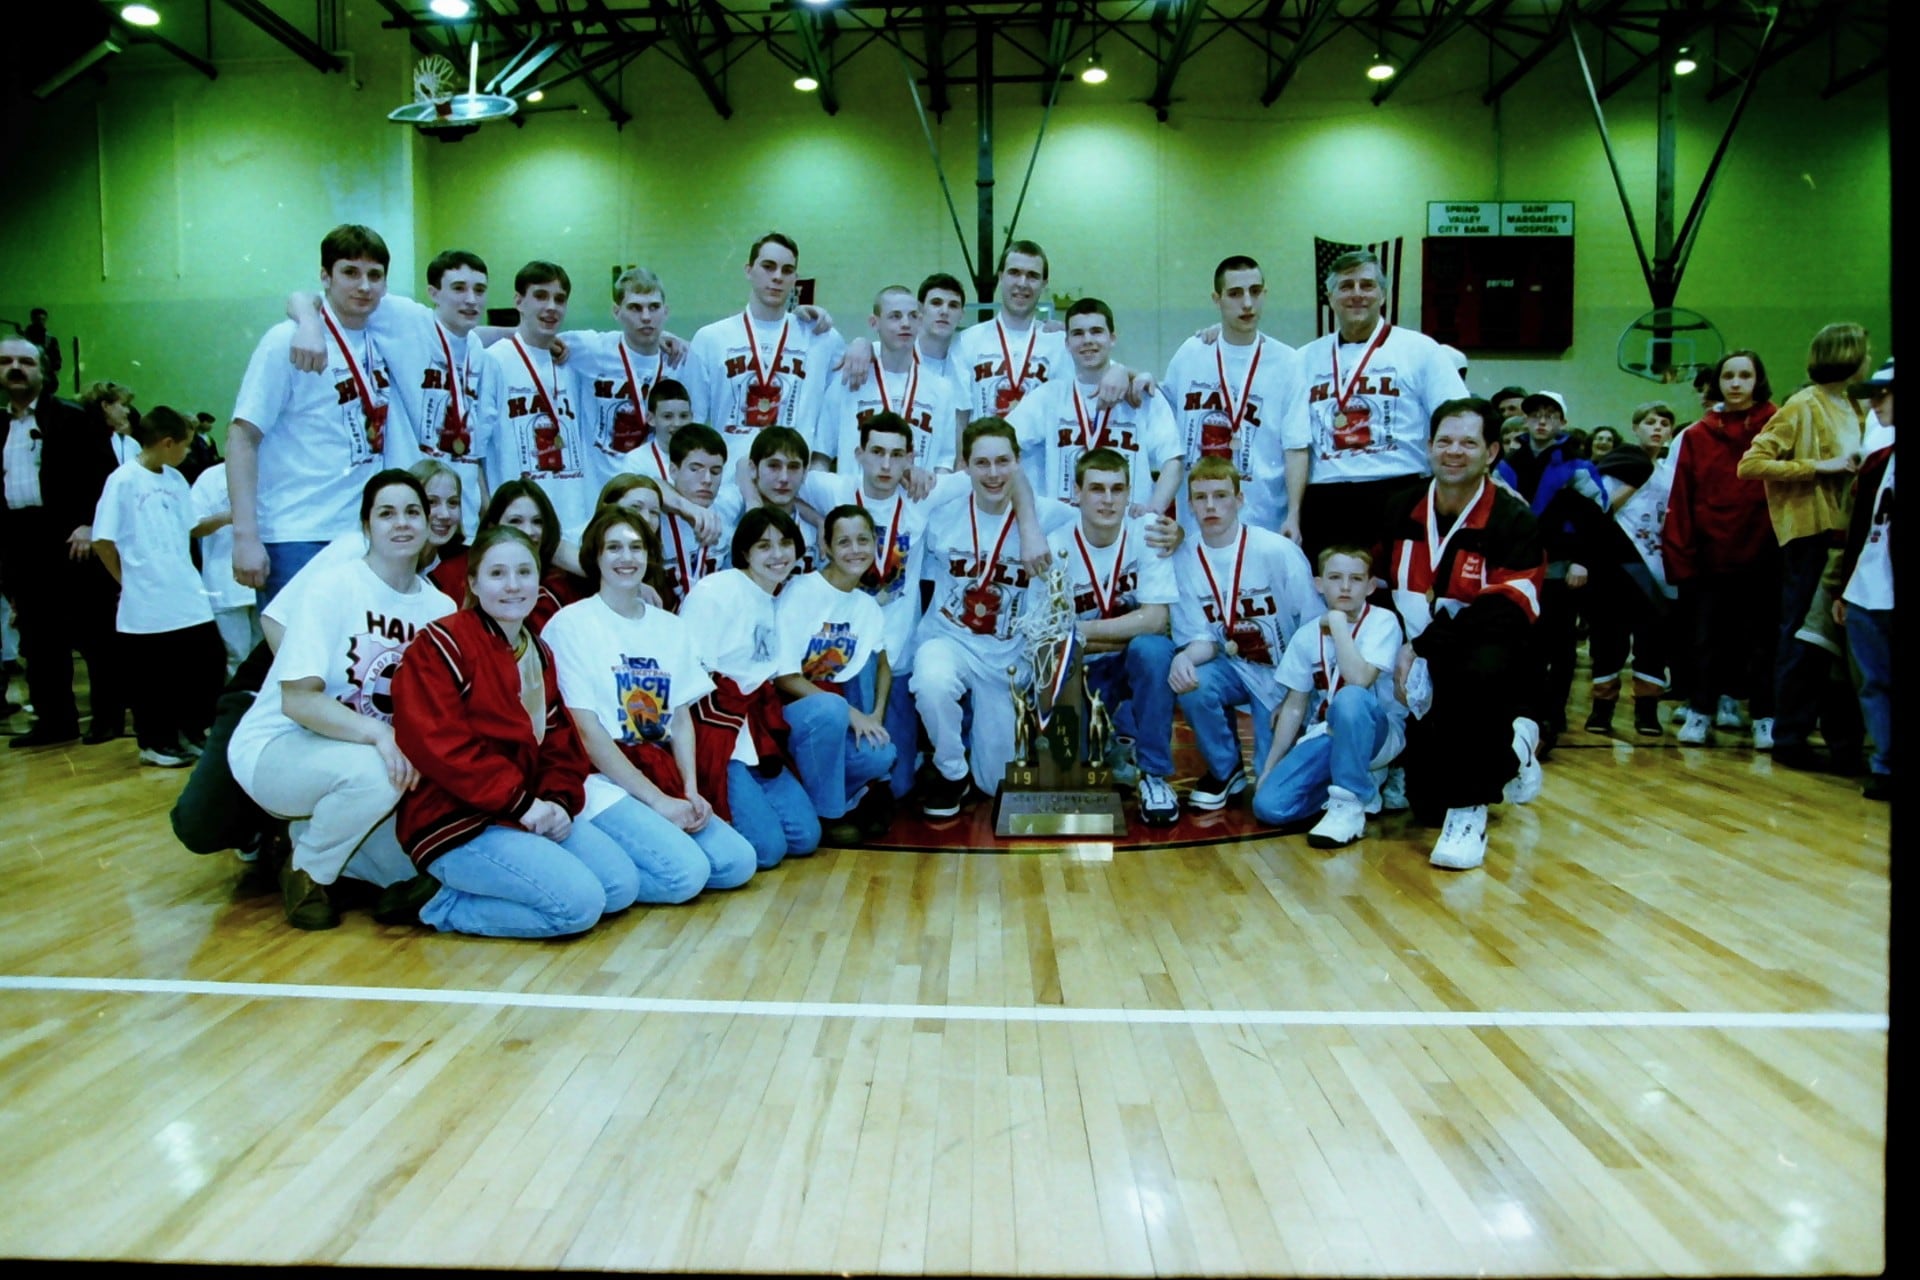 Bureau County Sports Hall of Fame: Hall 1996-98 state basketball teams at glance